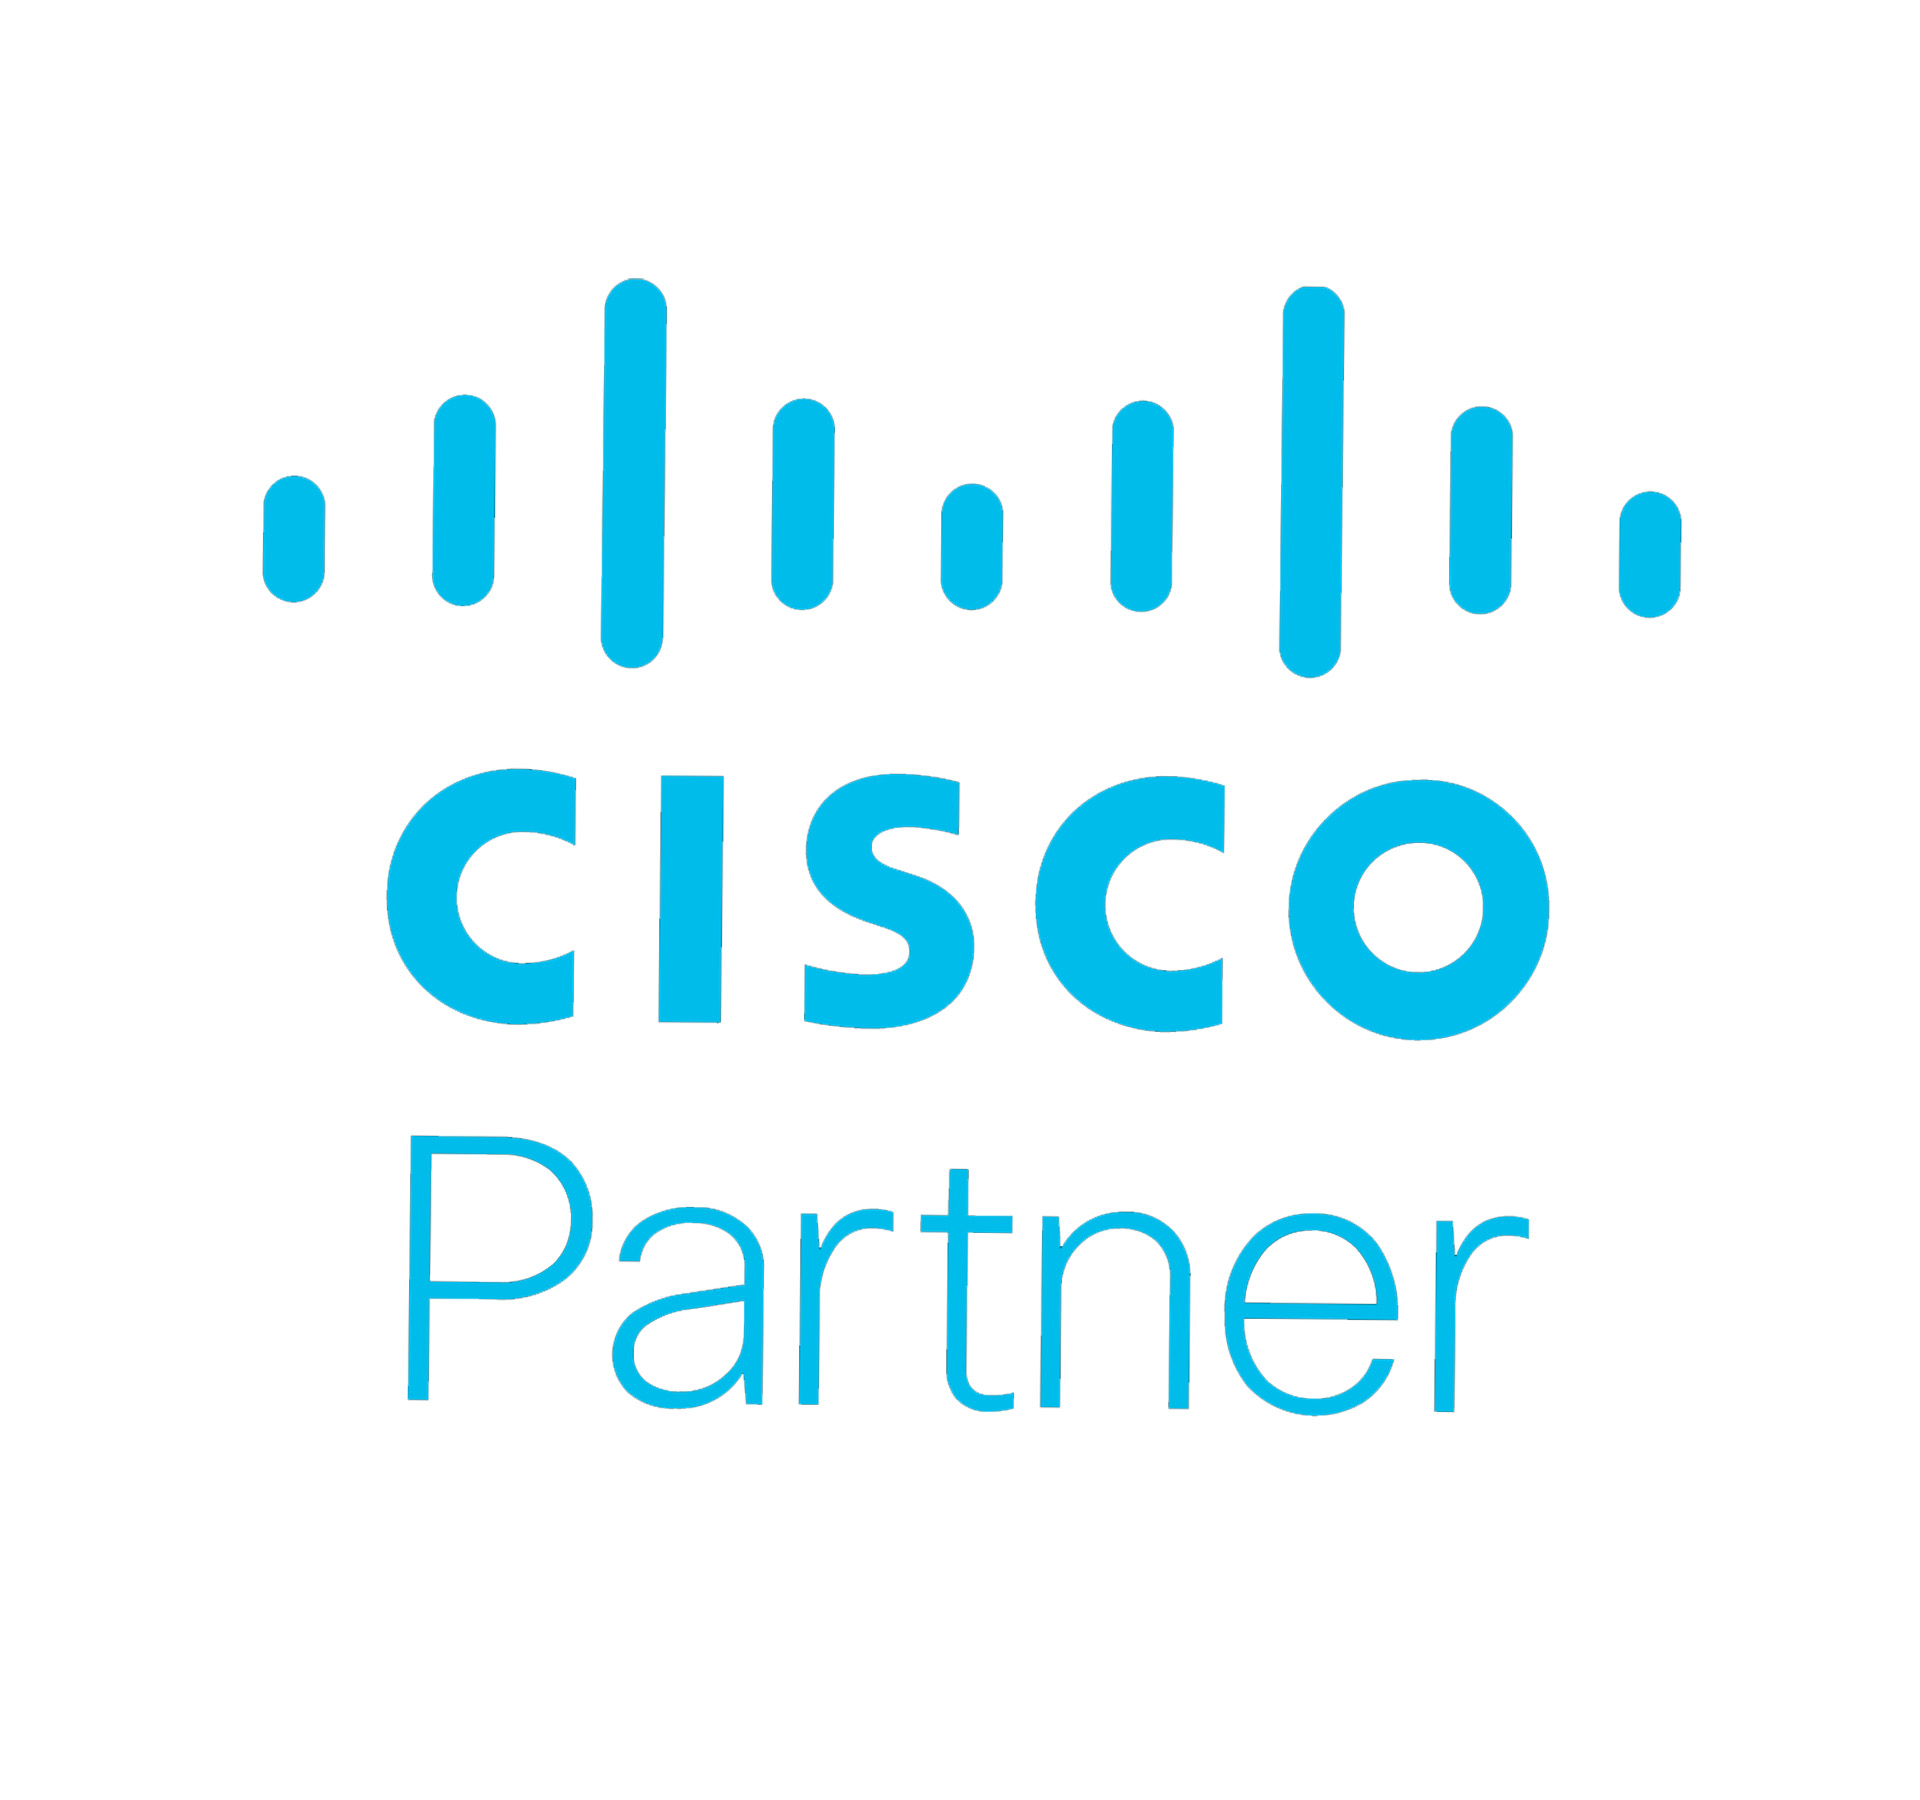 cisco_partner_logo_whitebg